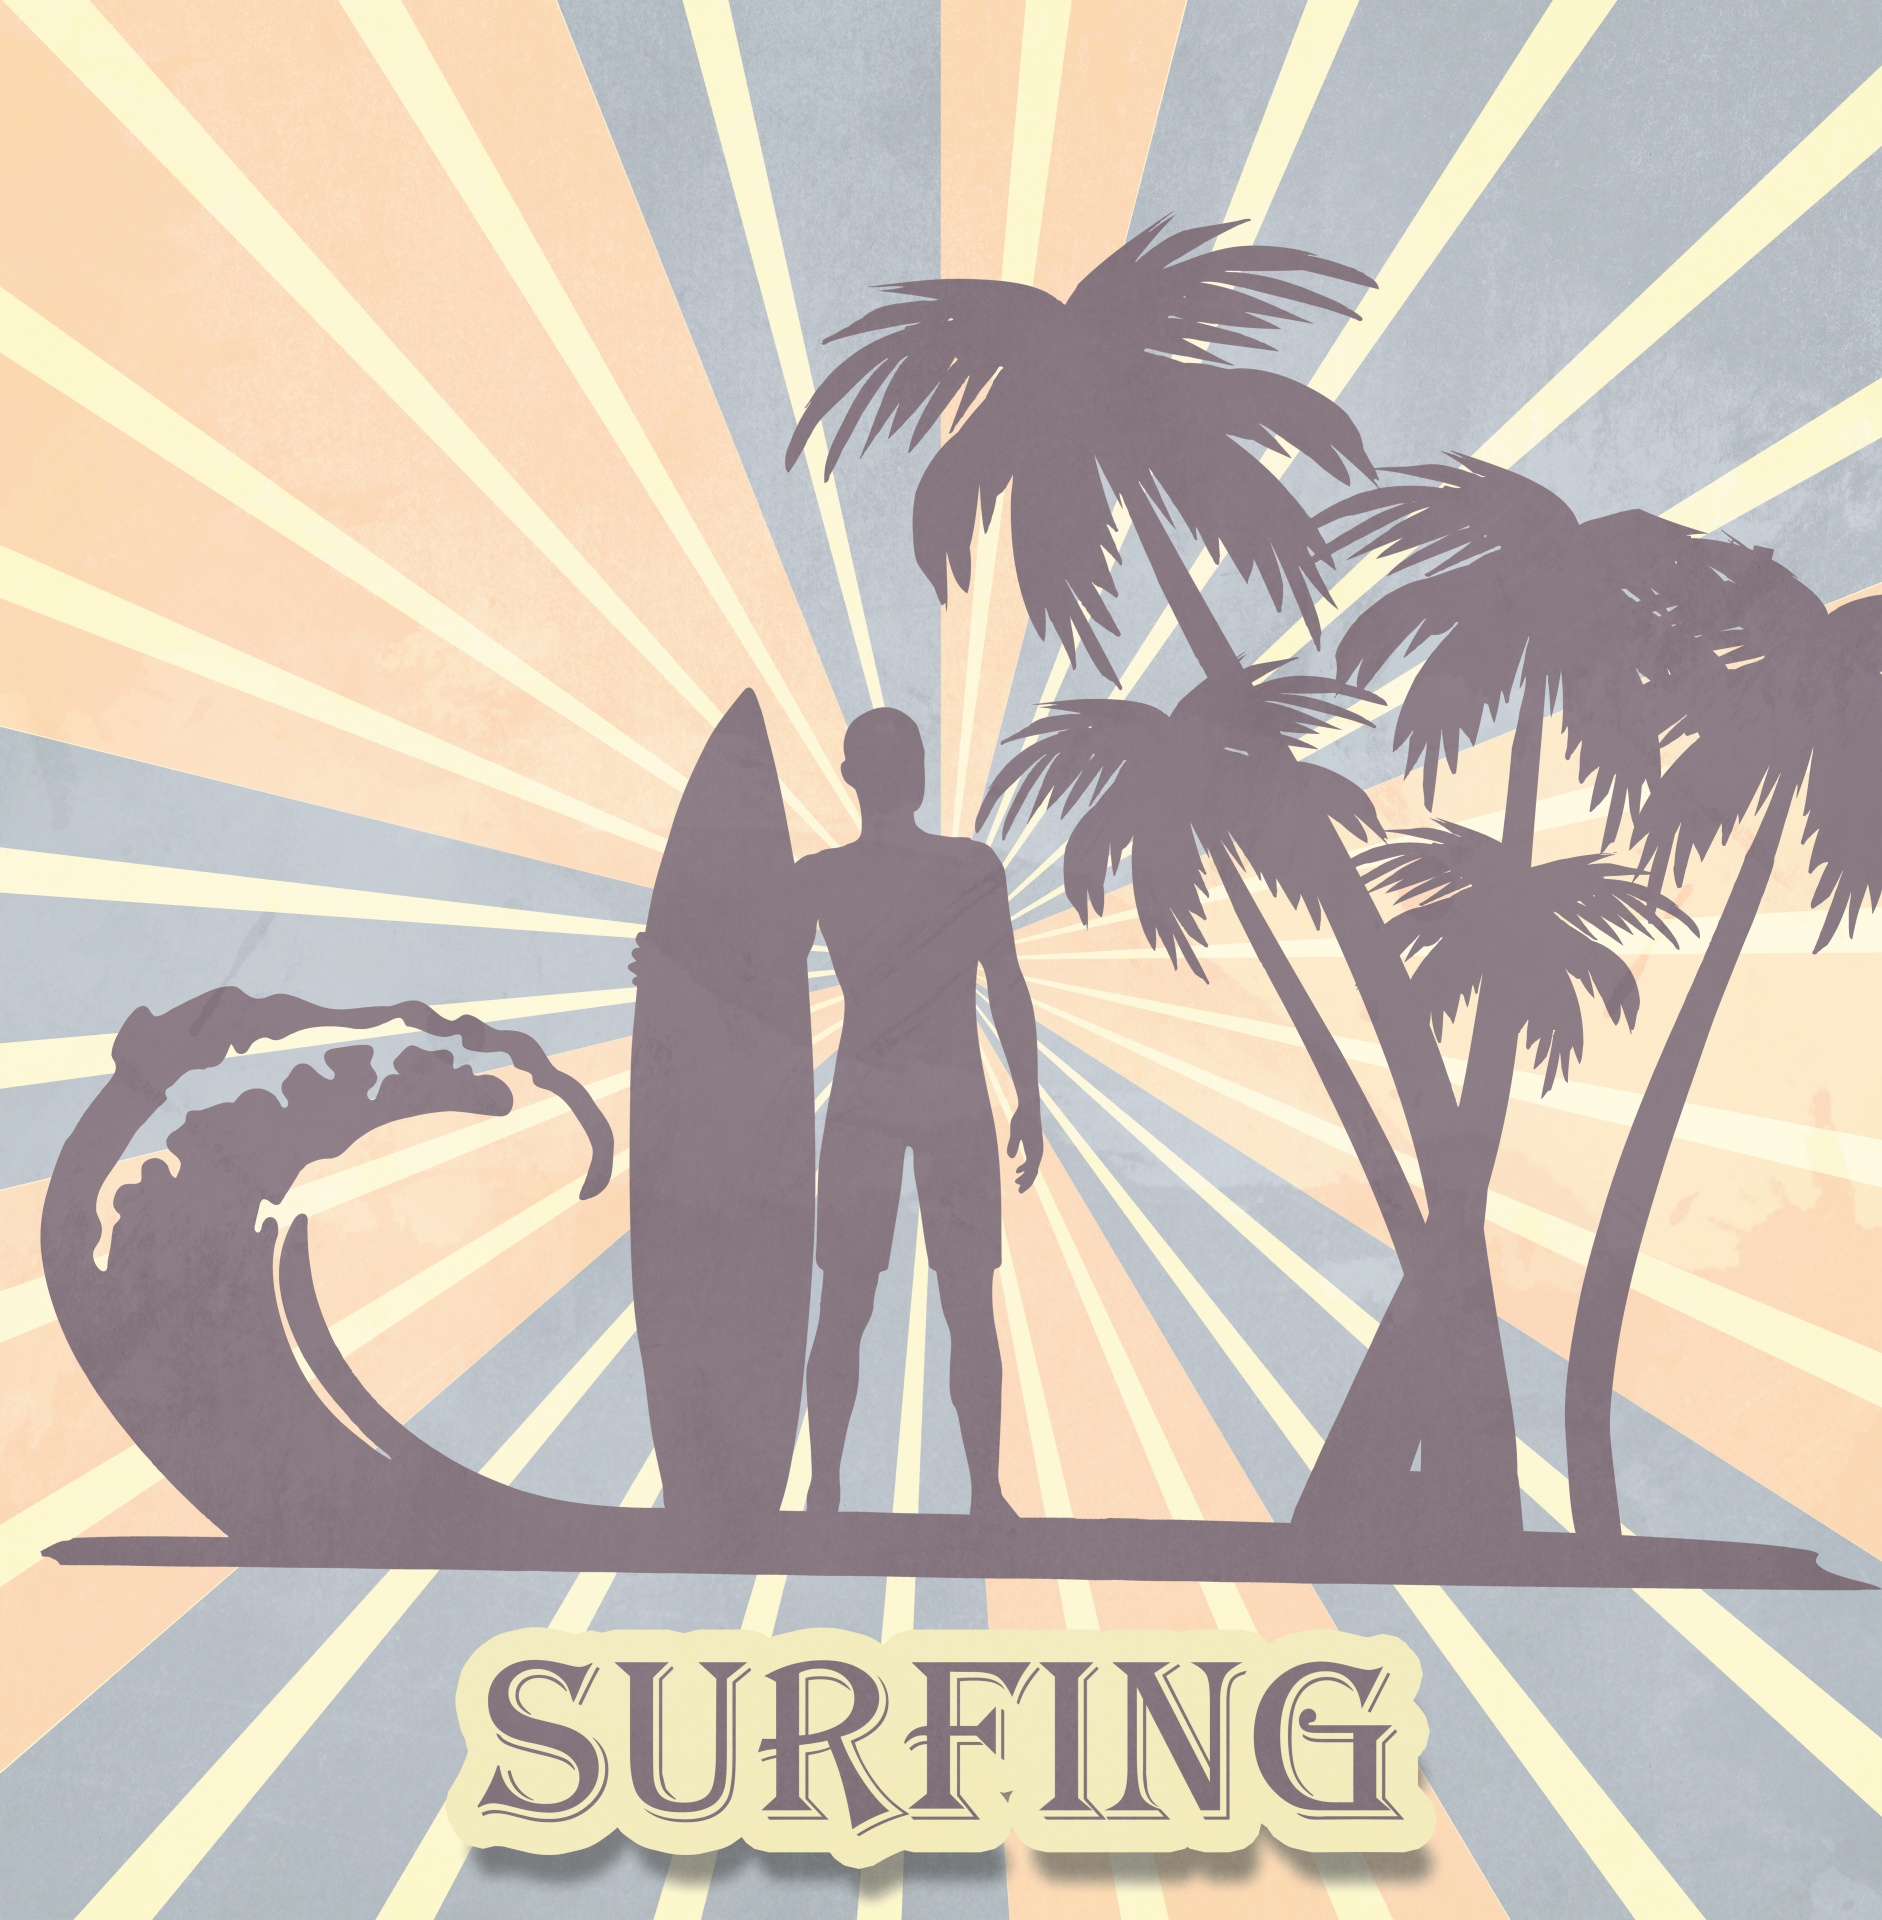 Surfer Retro Background Poster